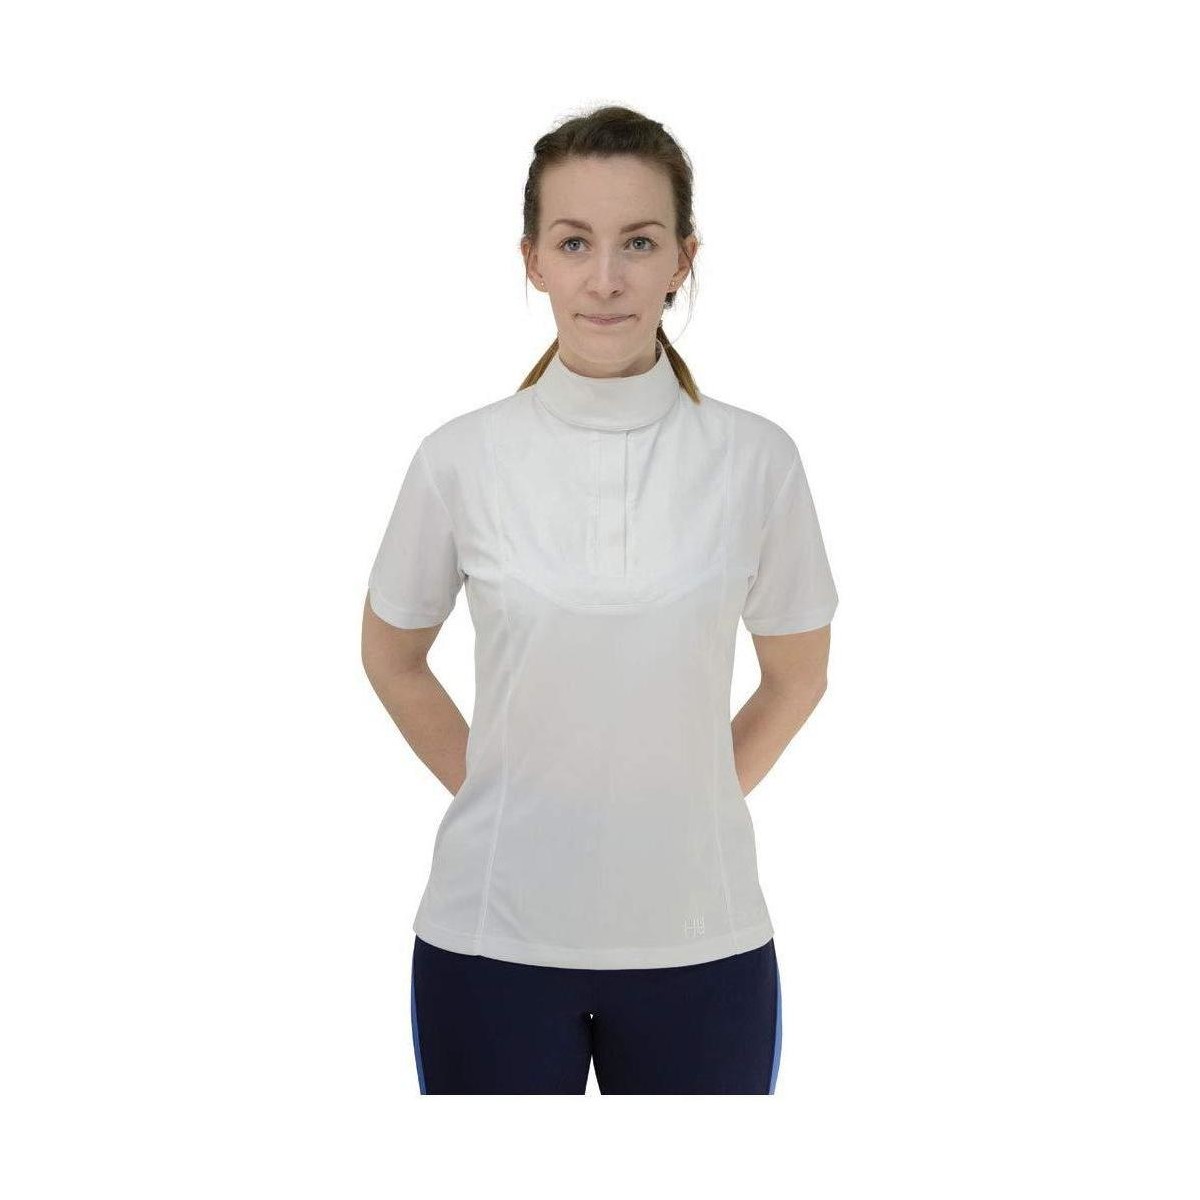 Vêtements Femme Chemises / Chemisiers Hyfashion Downham Blanc